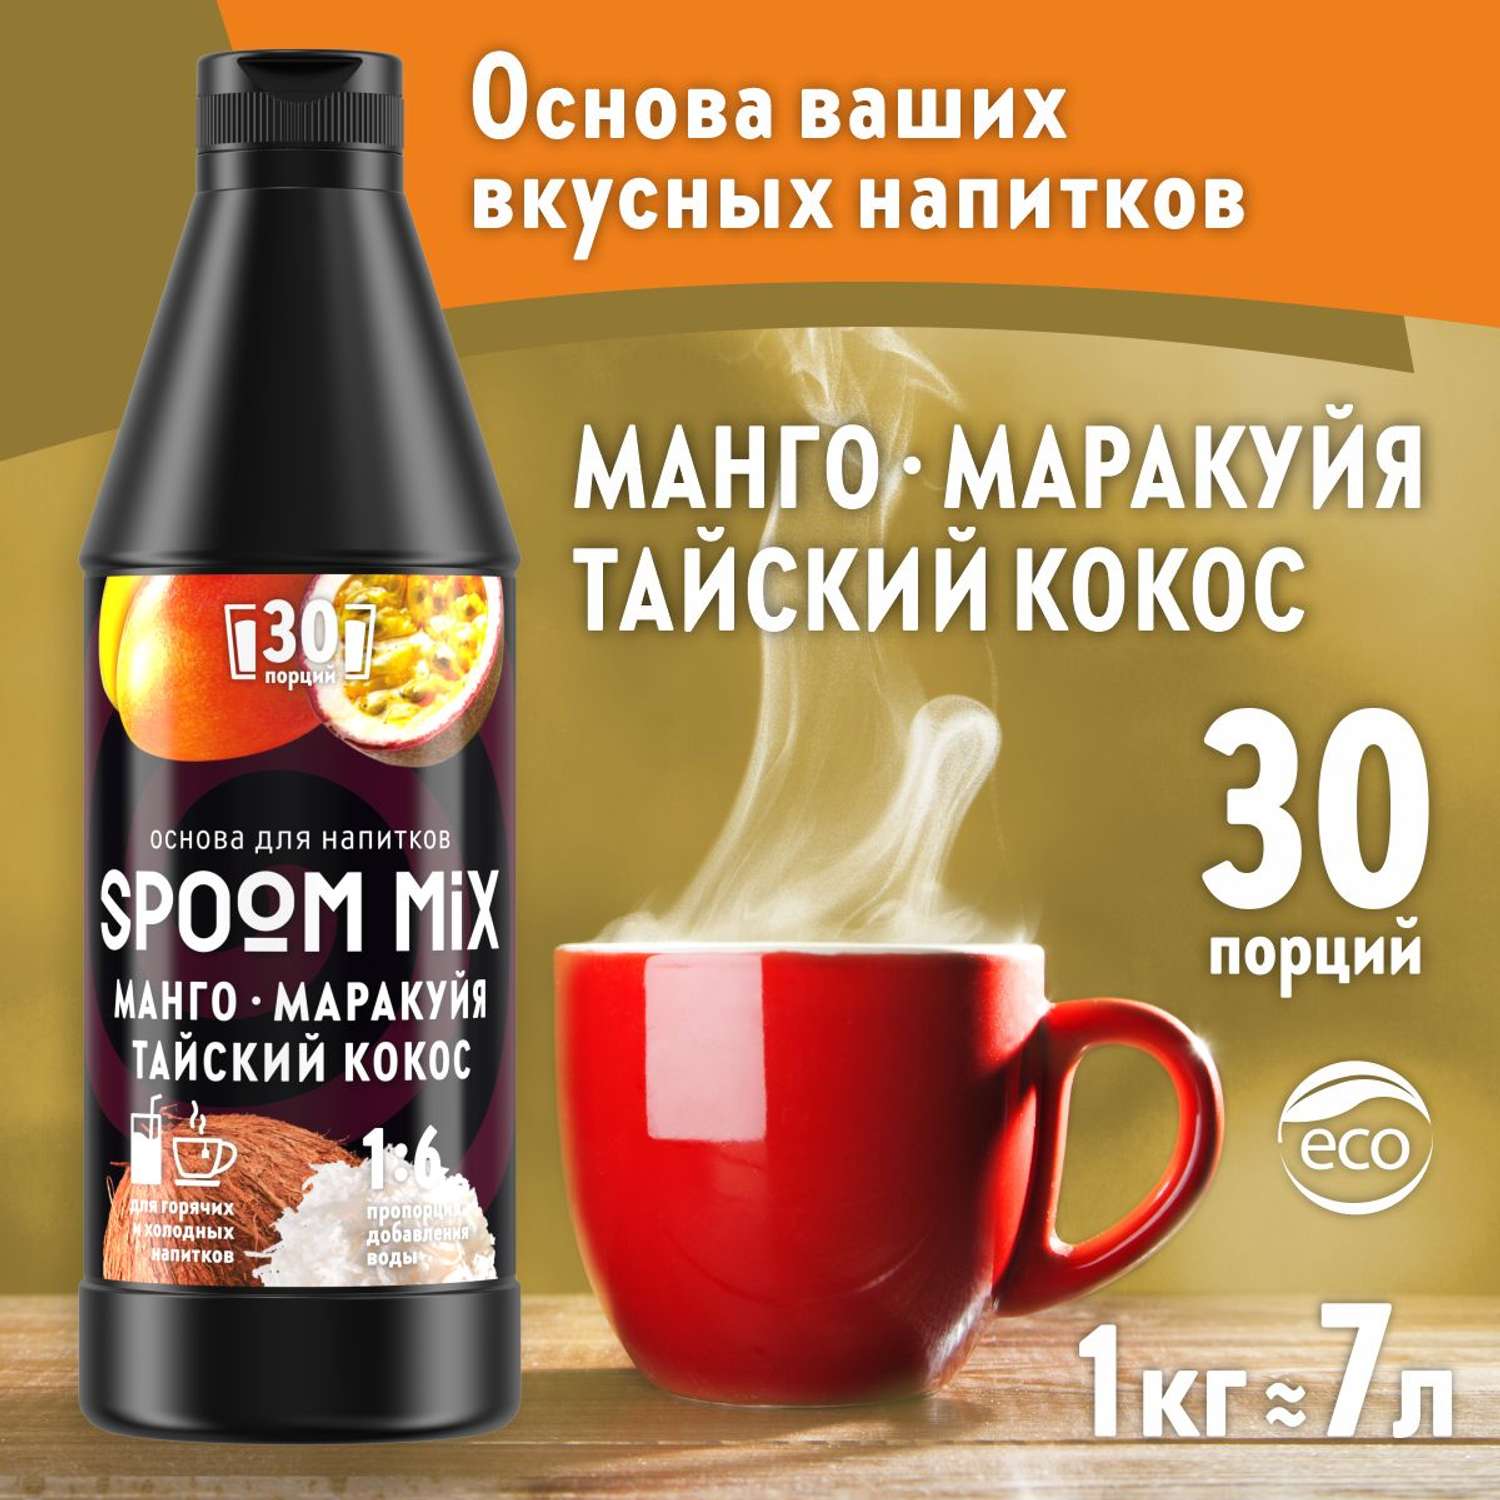 Основа для напитков SPOOM MIX Манго маракуйя тайский кокос 1 кг - фото 1